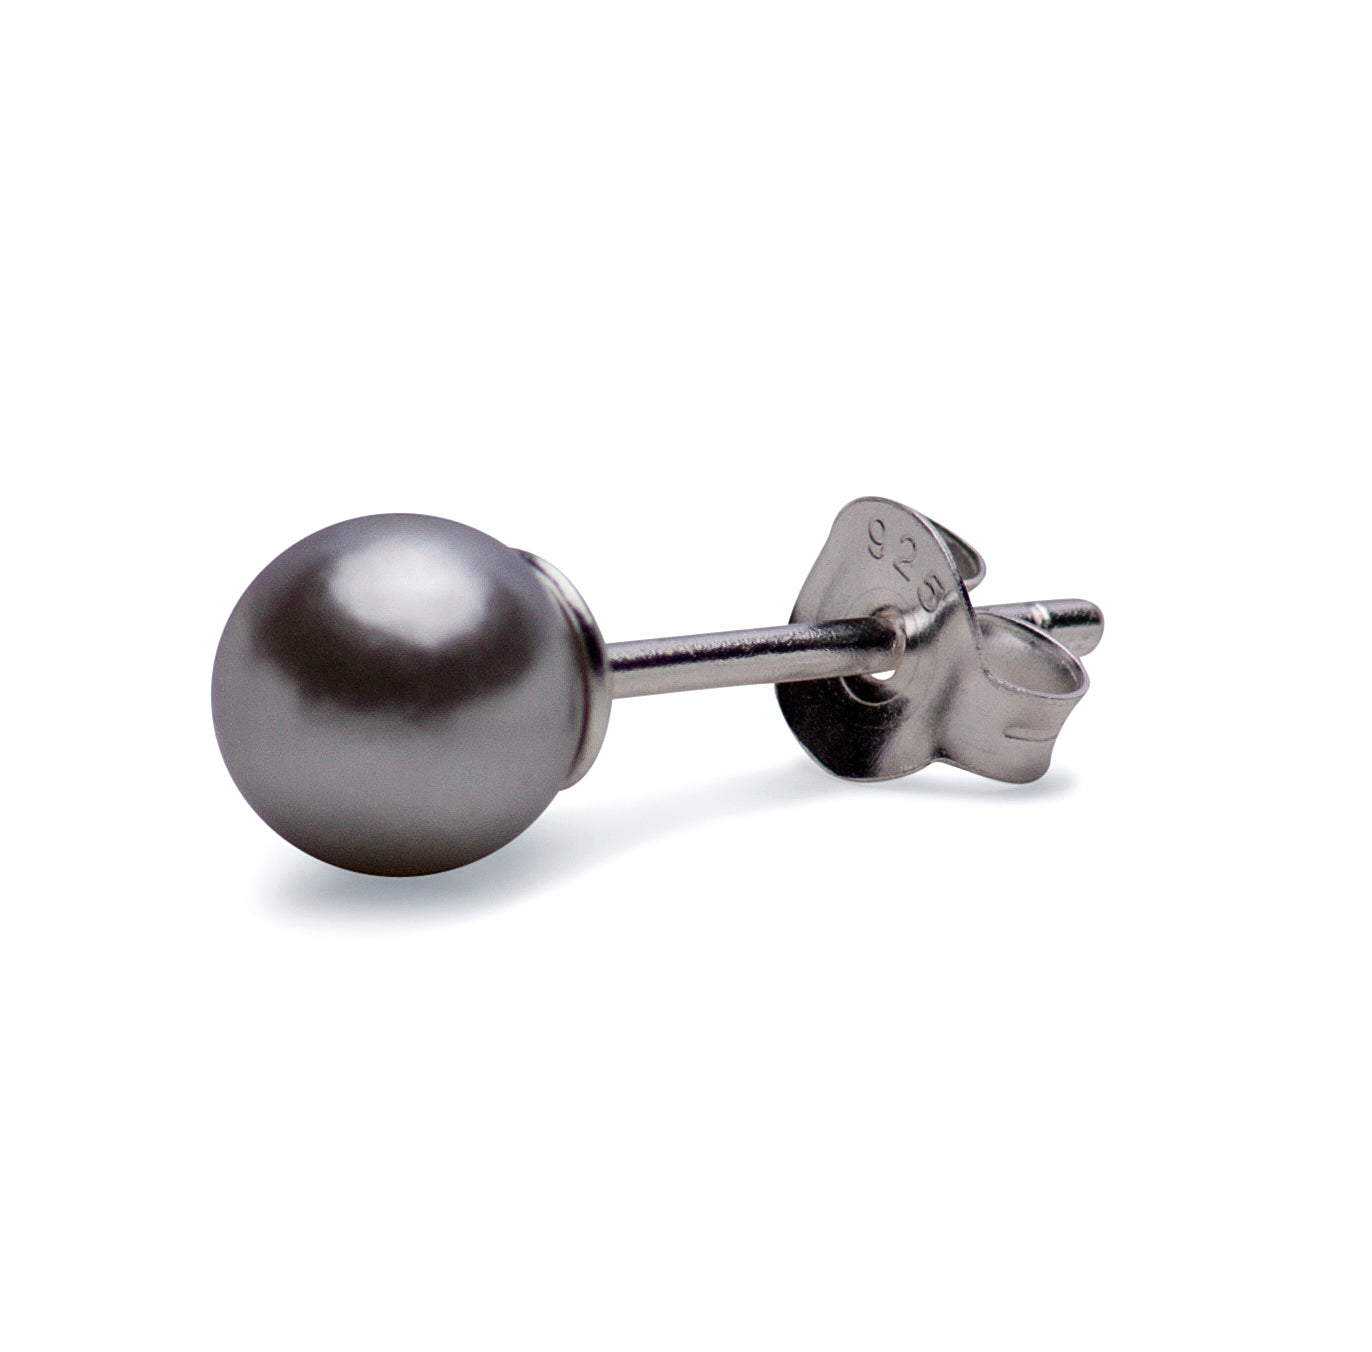 Grey South Seas Pearl Earrings | SilverAndGold